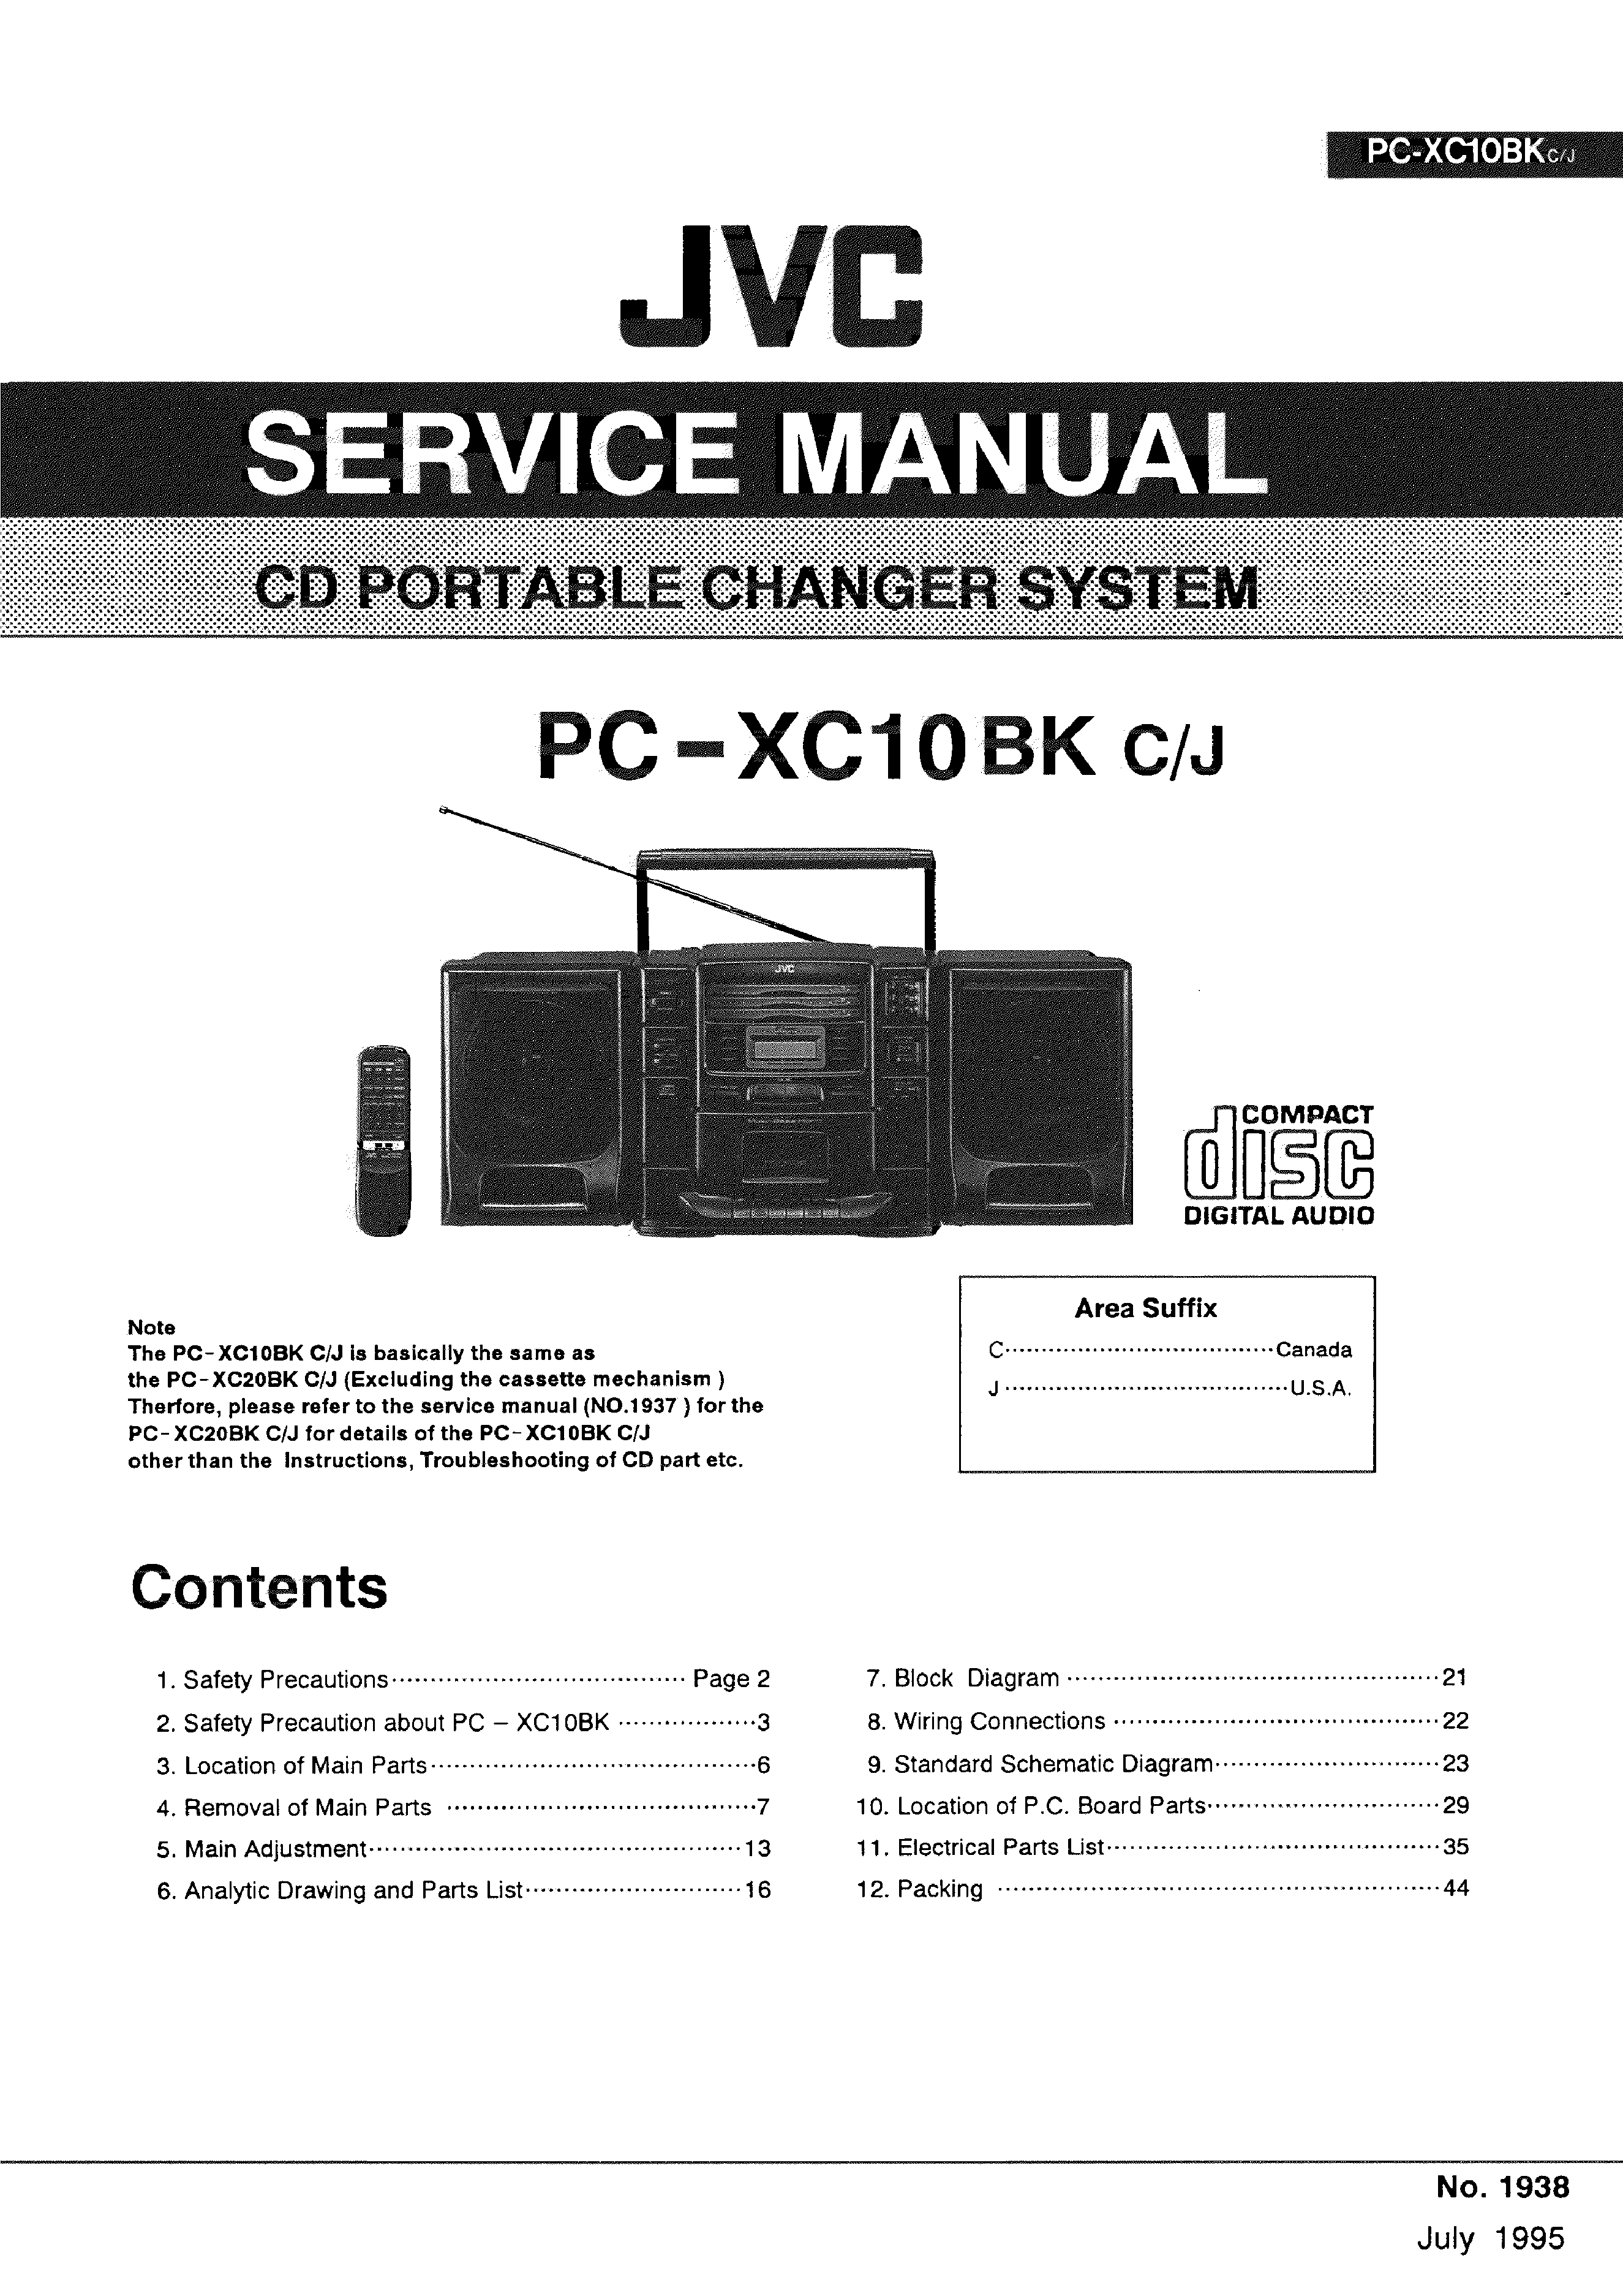 JVC HR-J321EM SERVICE MANUAL Pdf Download | ManualsLib